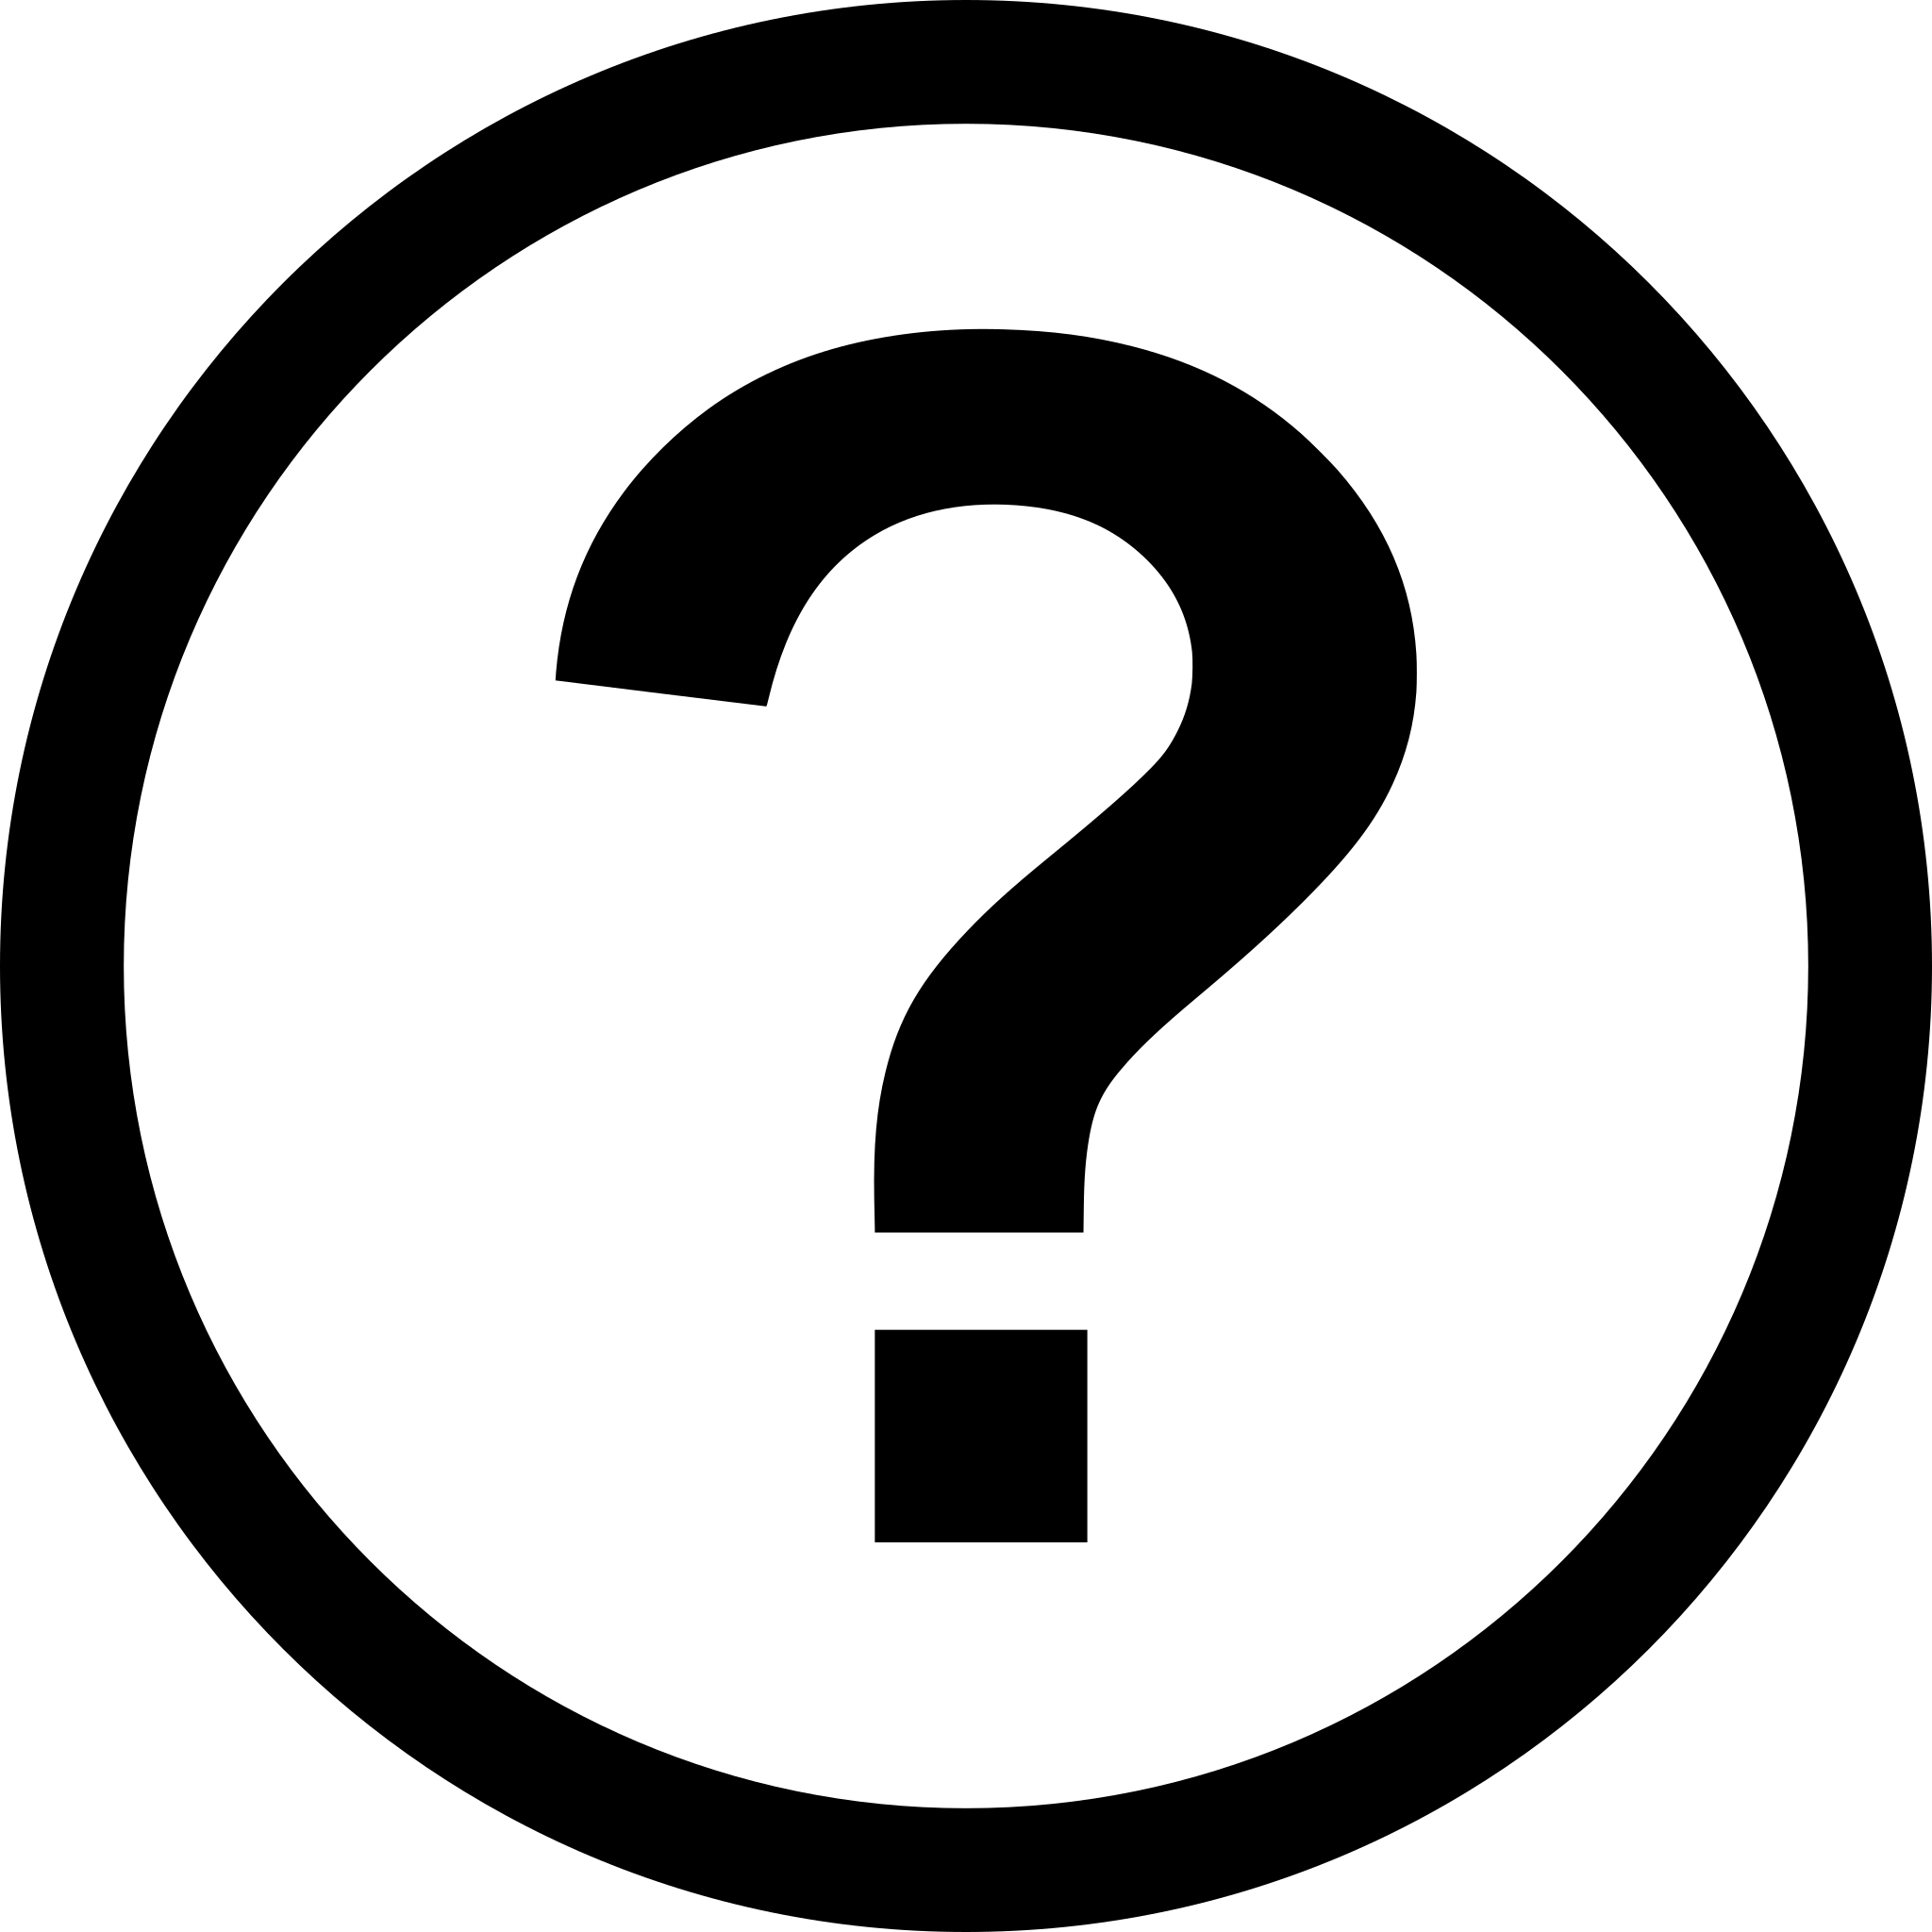 FAQ icon or question mark symbol